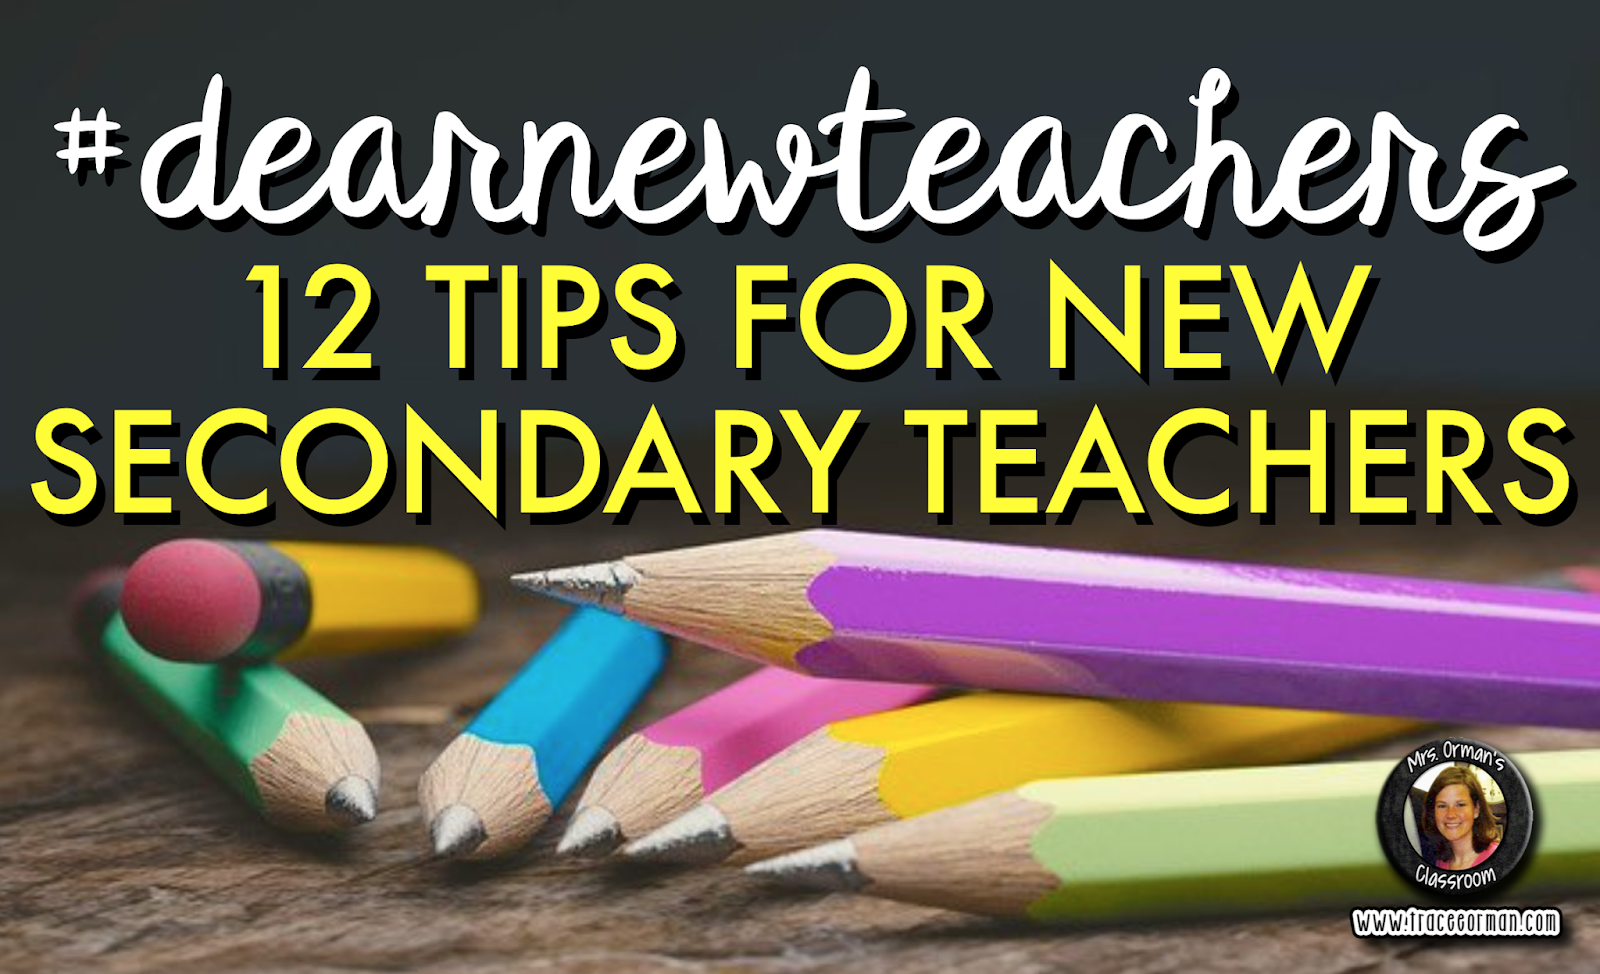 12 tips for new teachers  www.traceeorman.com